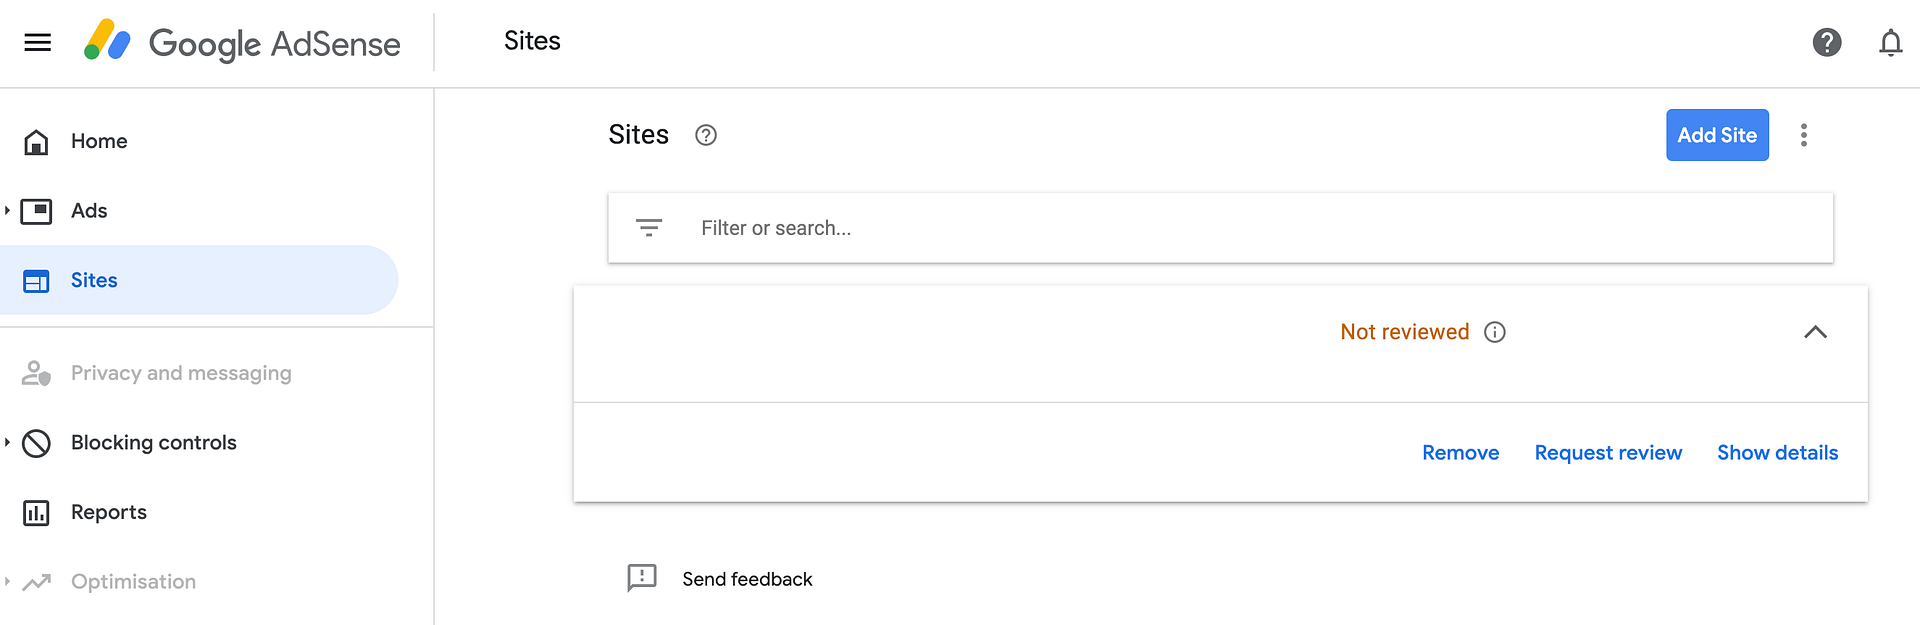 Google adsense login